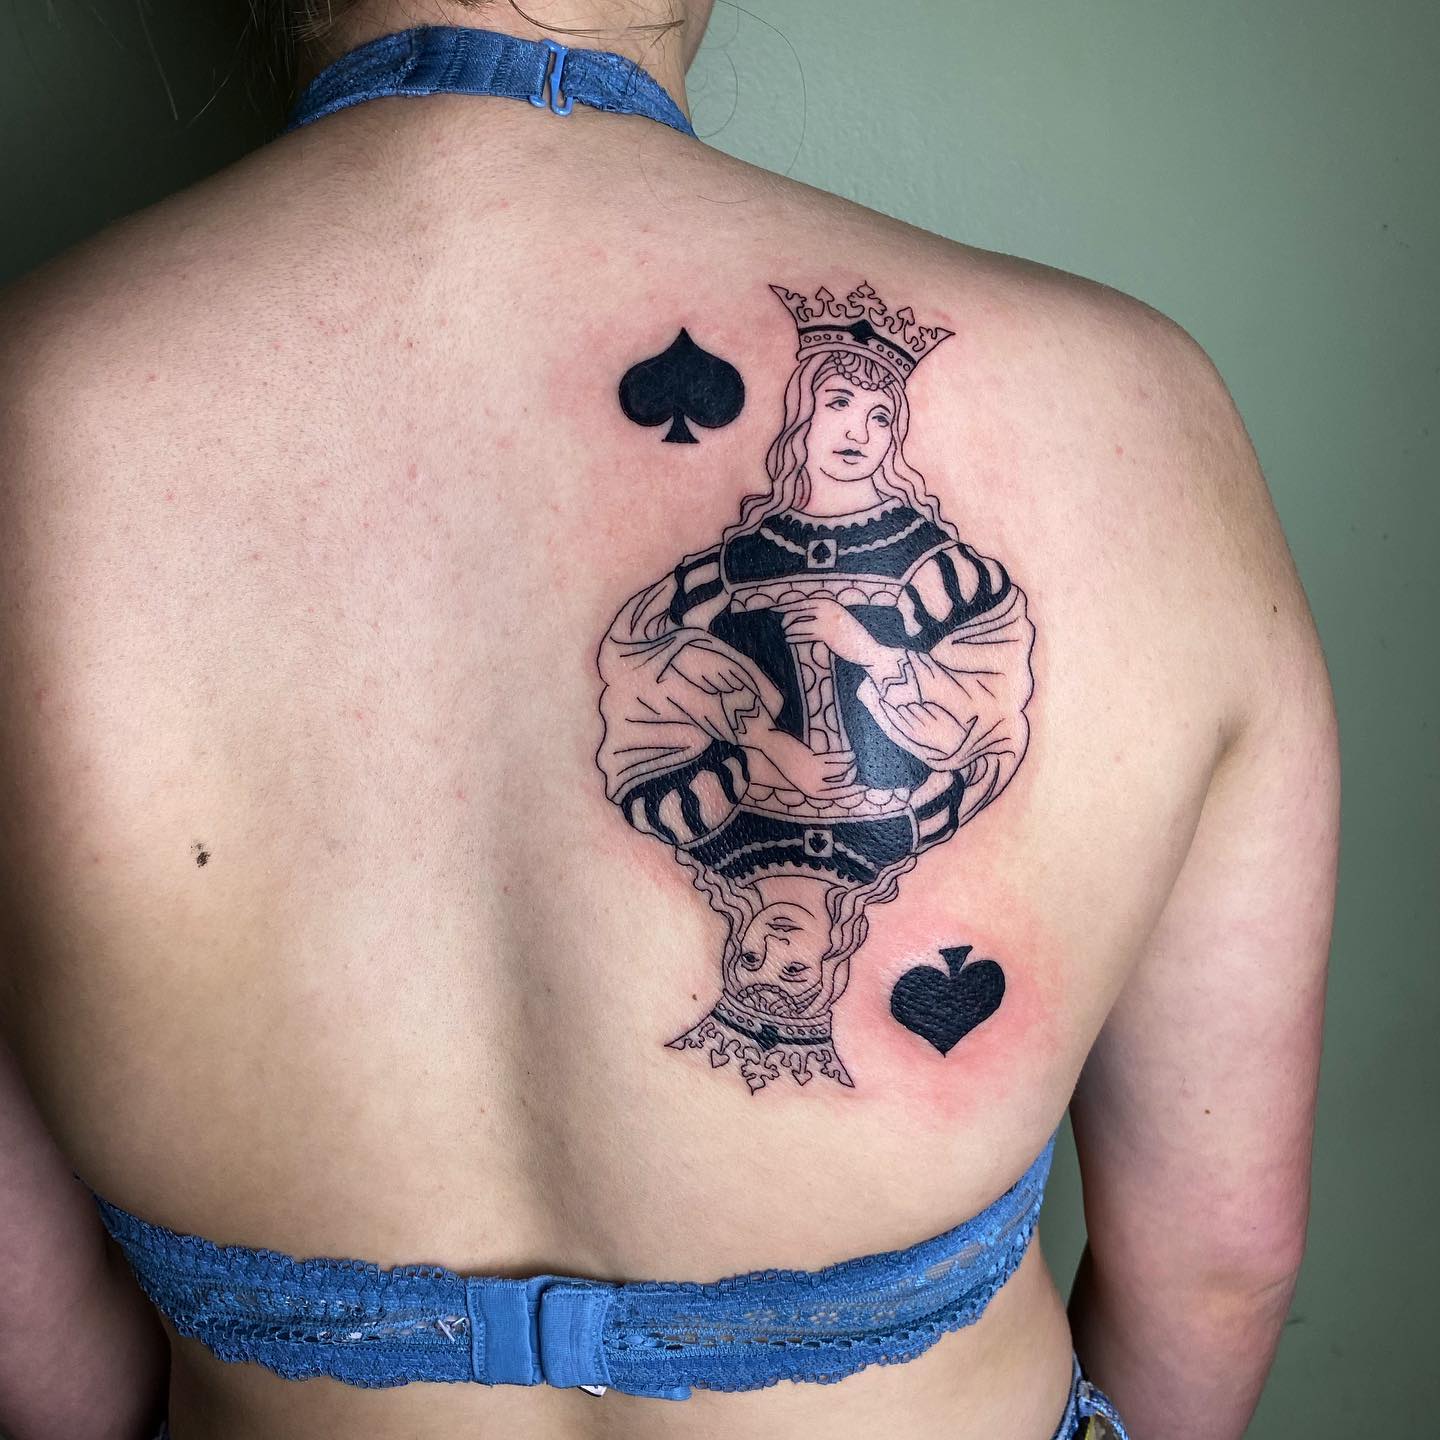 Tatuaje de Reina de Picas en la Espalda